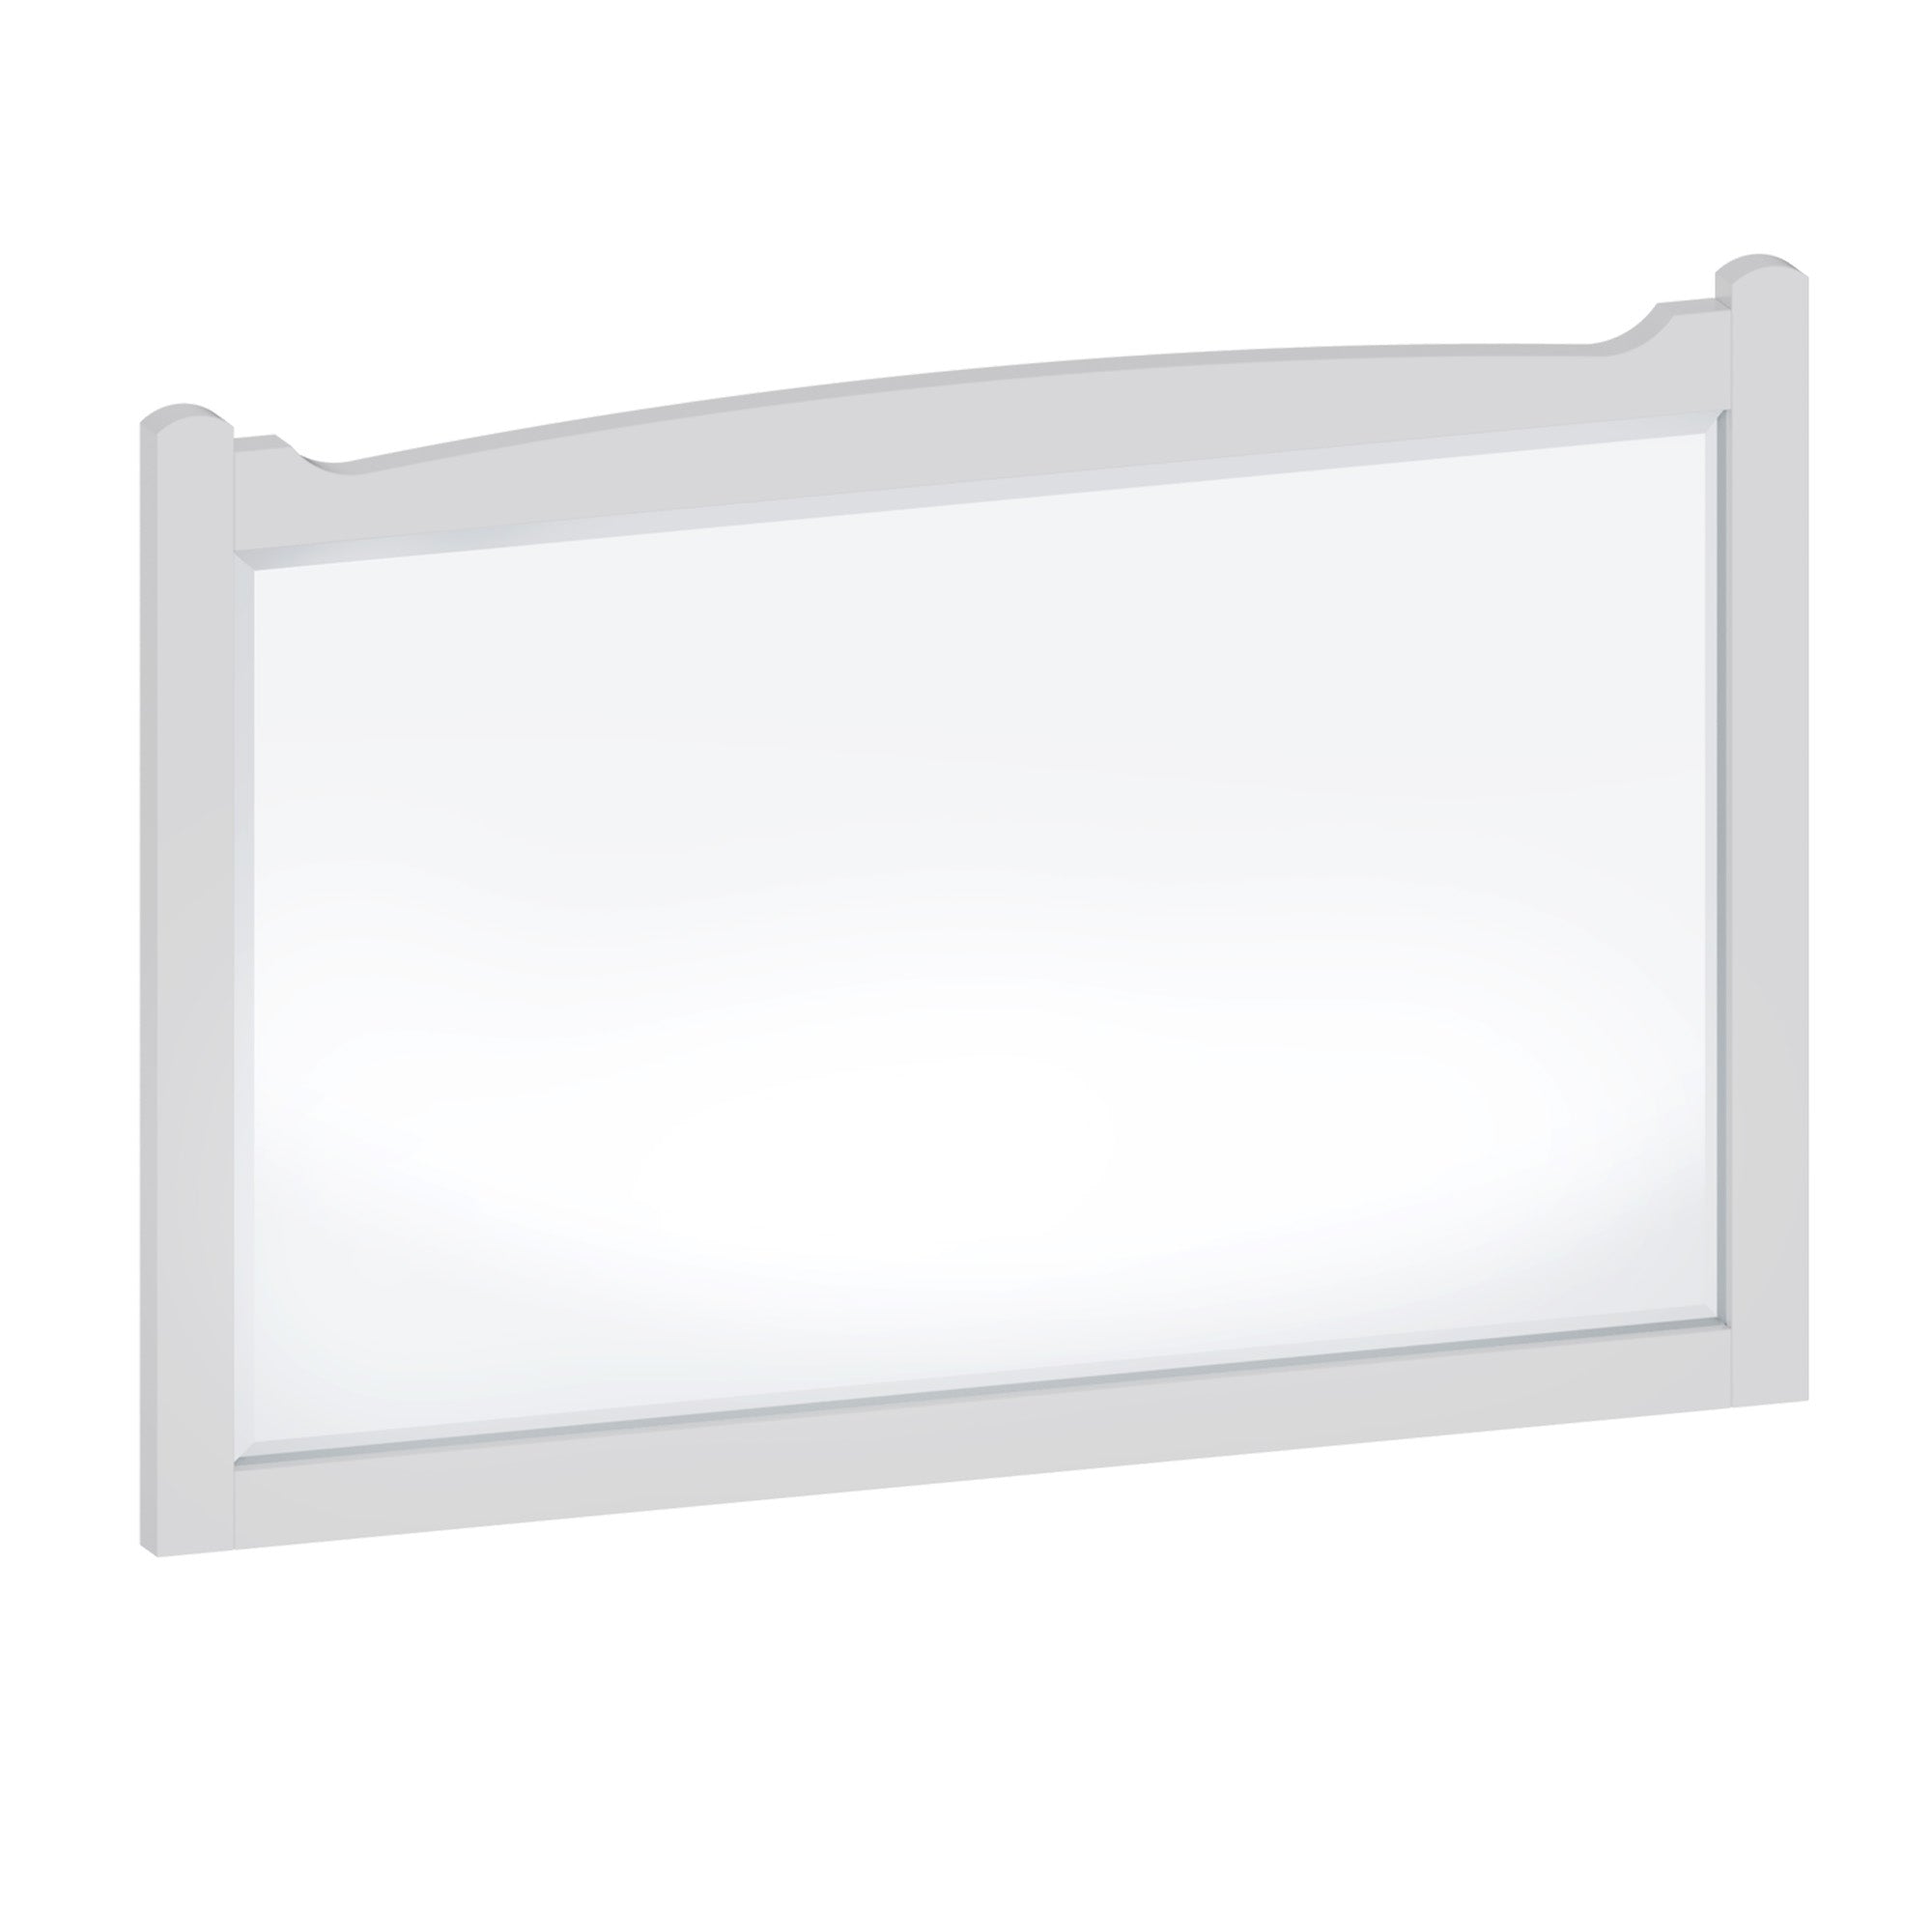 burlington guild 850 framed bathroom mirror varley white